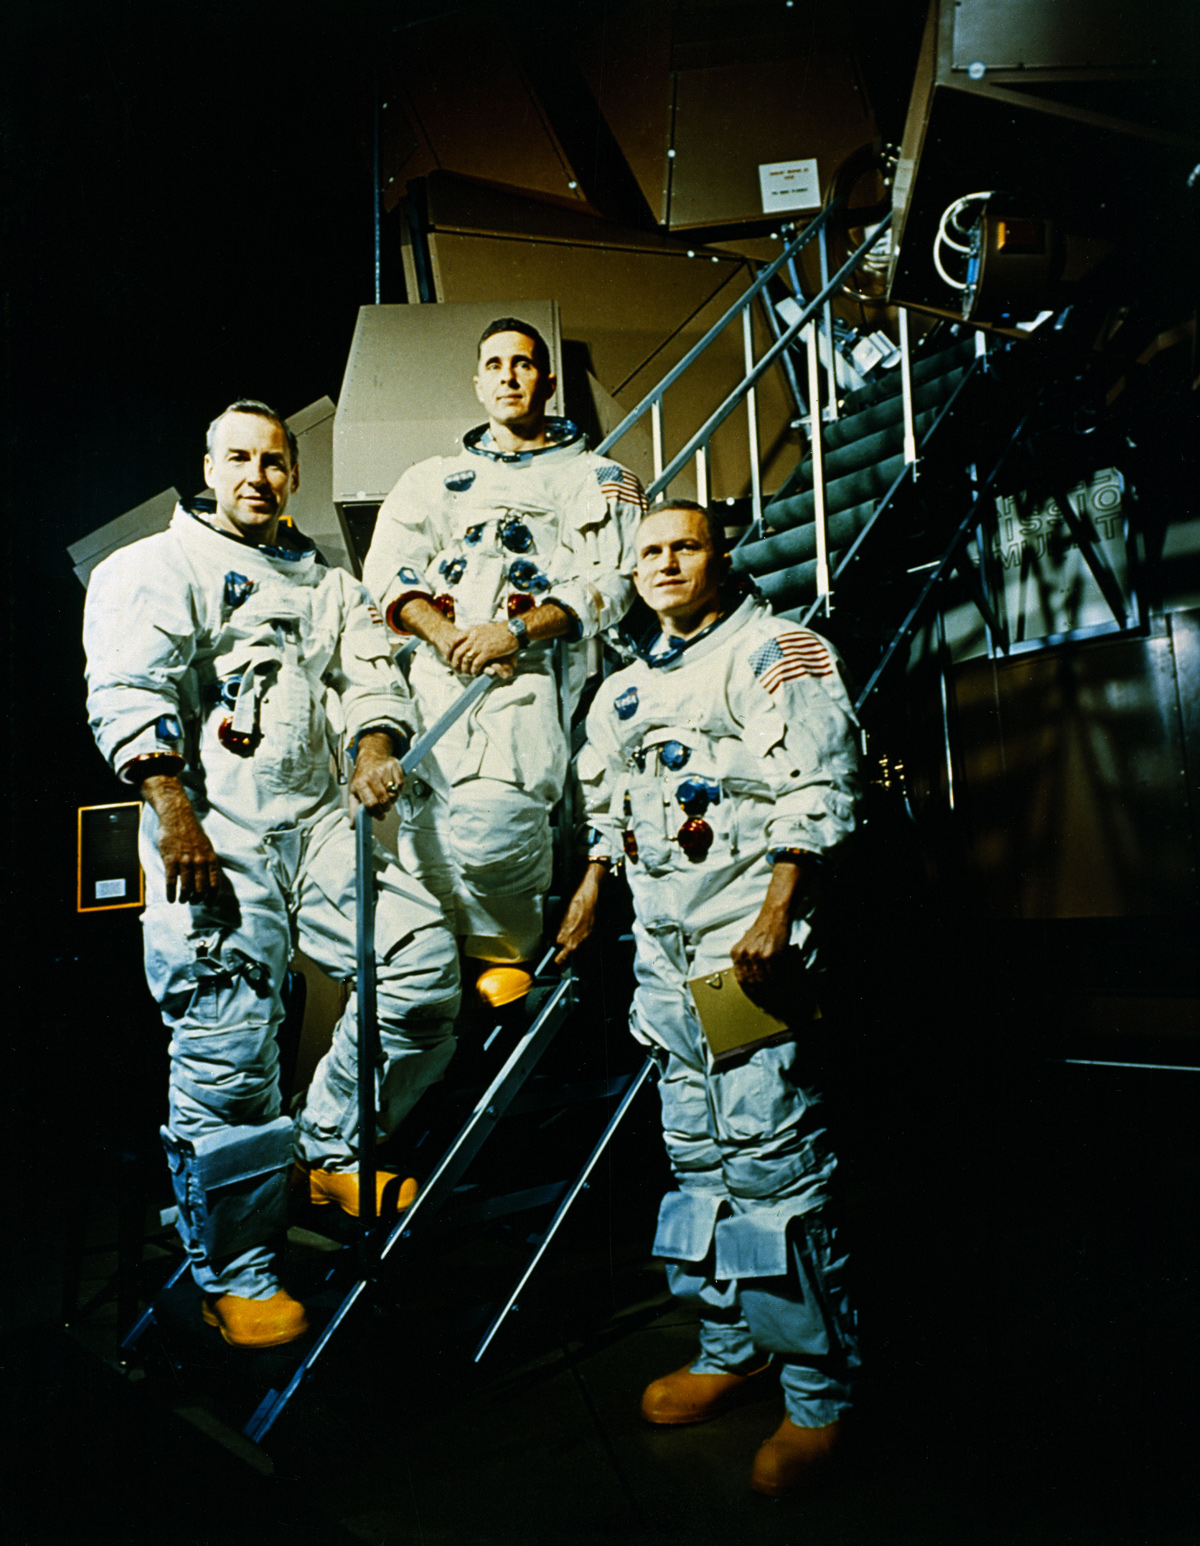 Crew of Apollo 8 mission